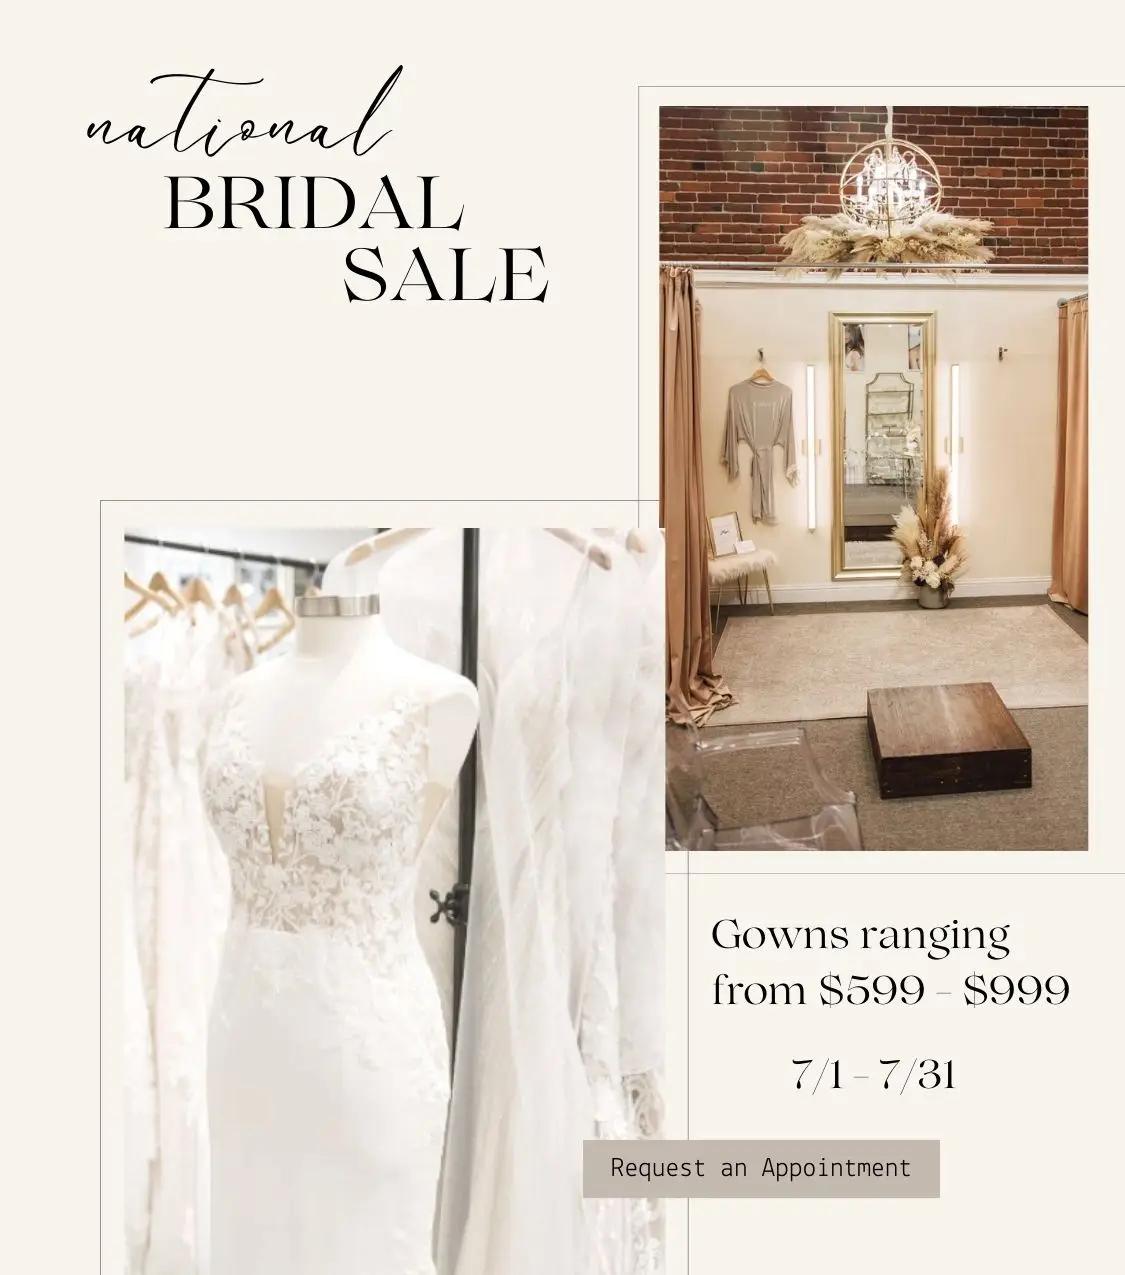 National Bridal Sale at Always Elegant Bridal